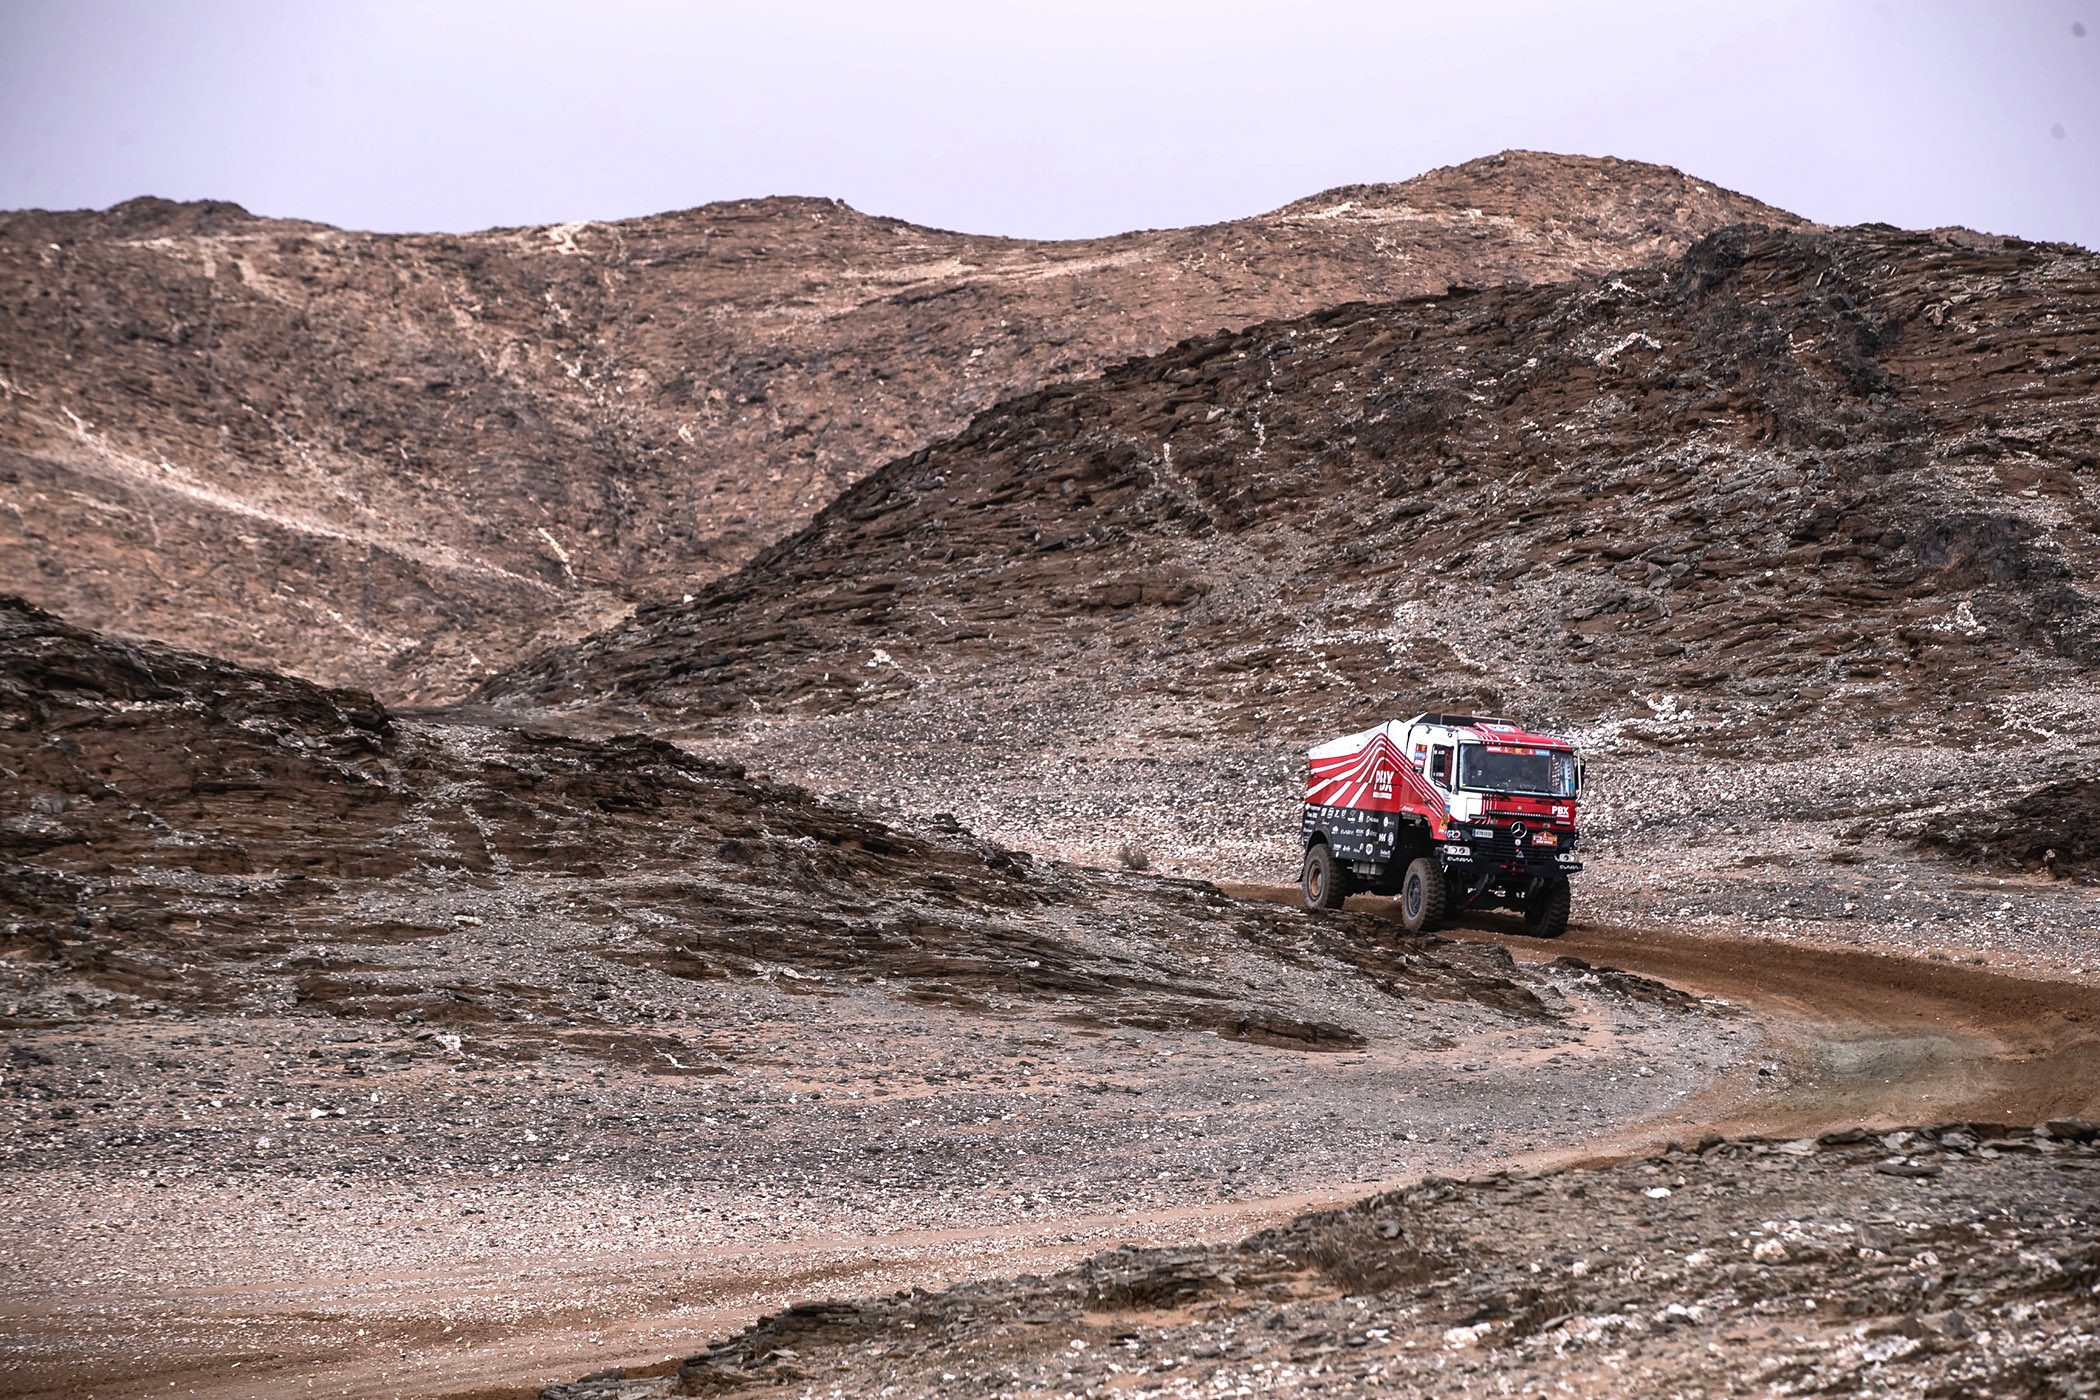 medalla brandor - PBX Dakar Team- BEUSUAL - camion dakar